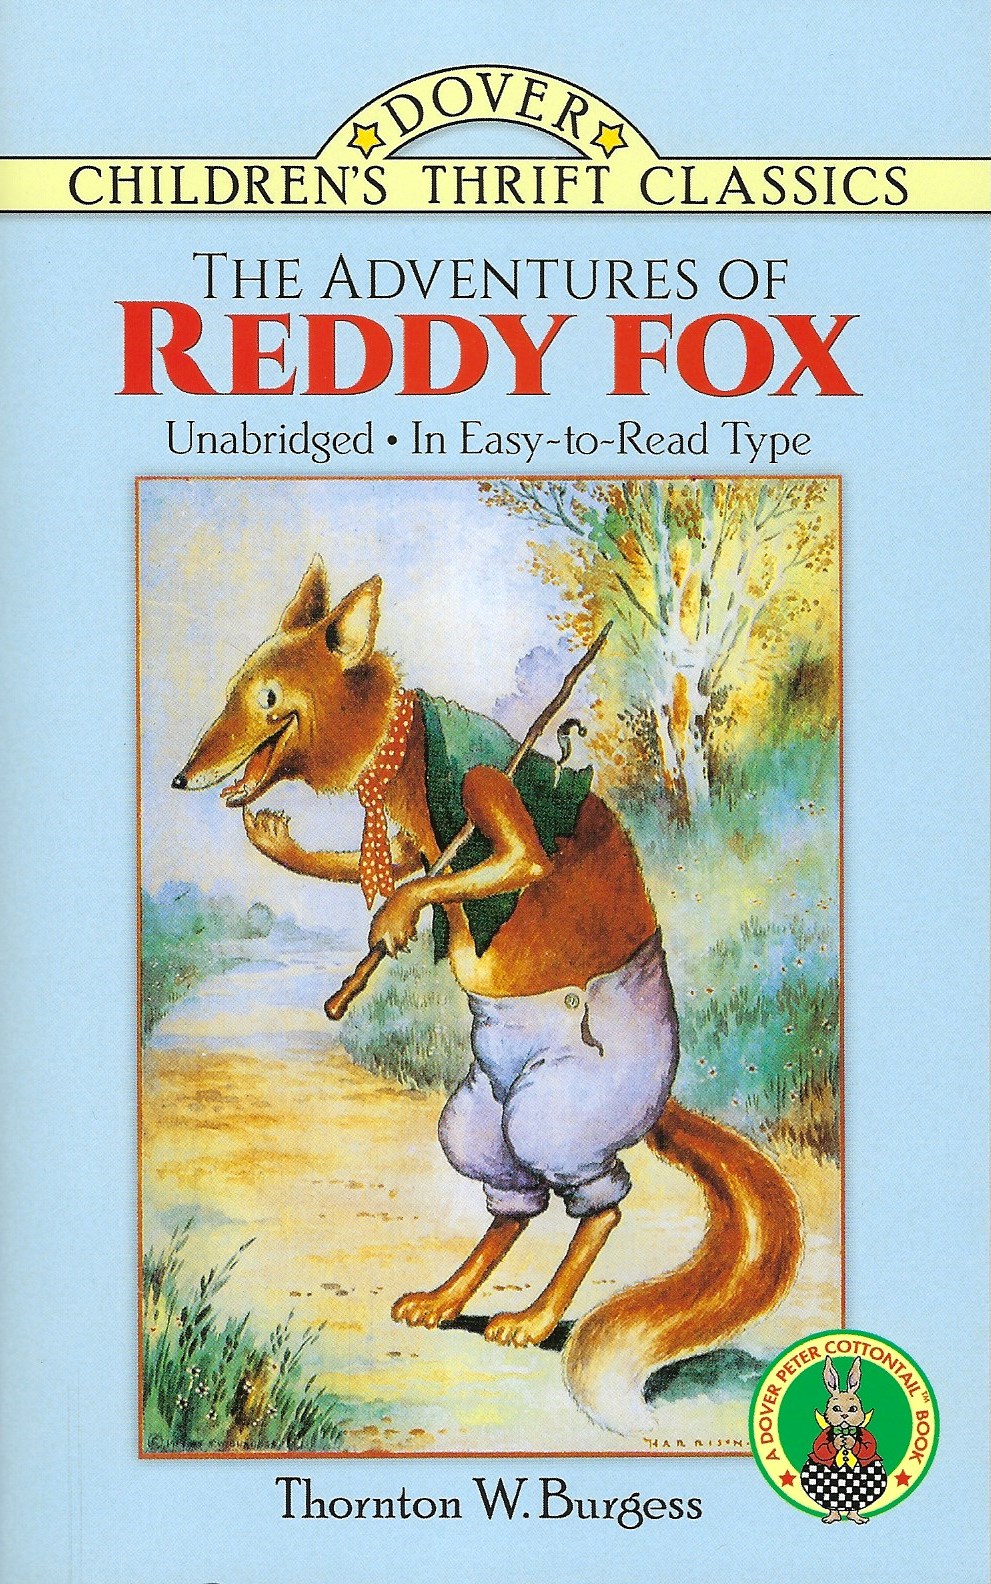 THE ADVENTURES OF REDDY FOX Thornton W. Burgess